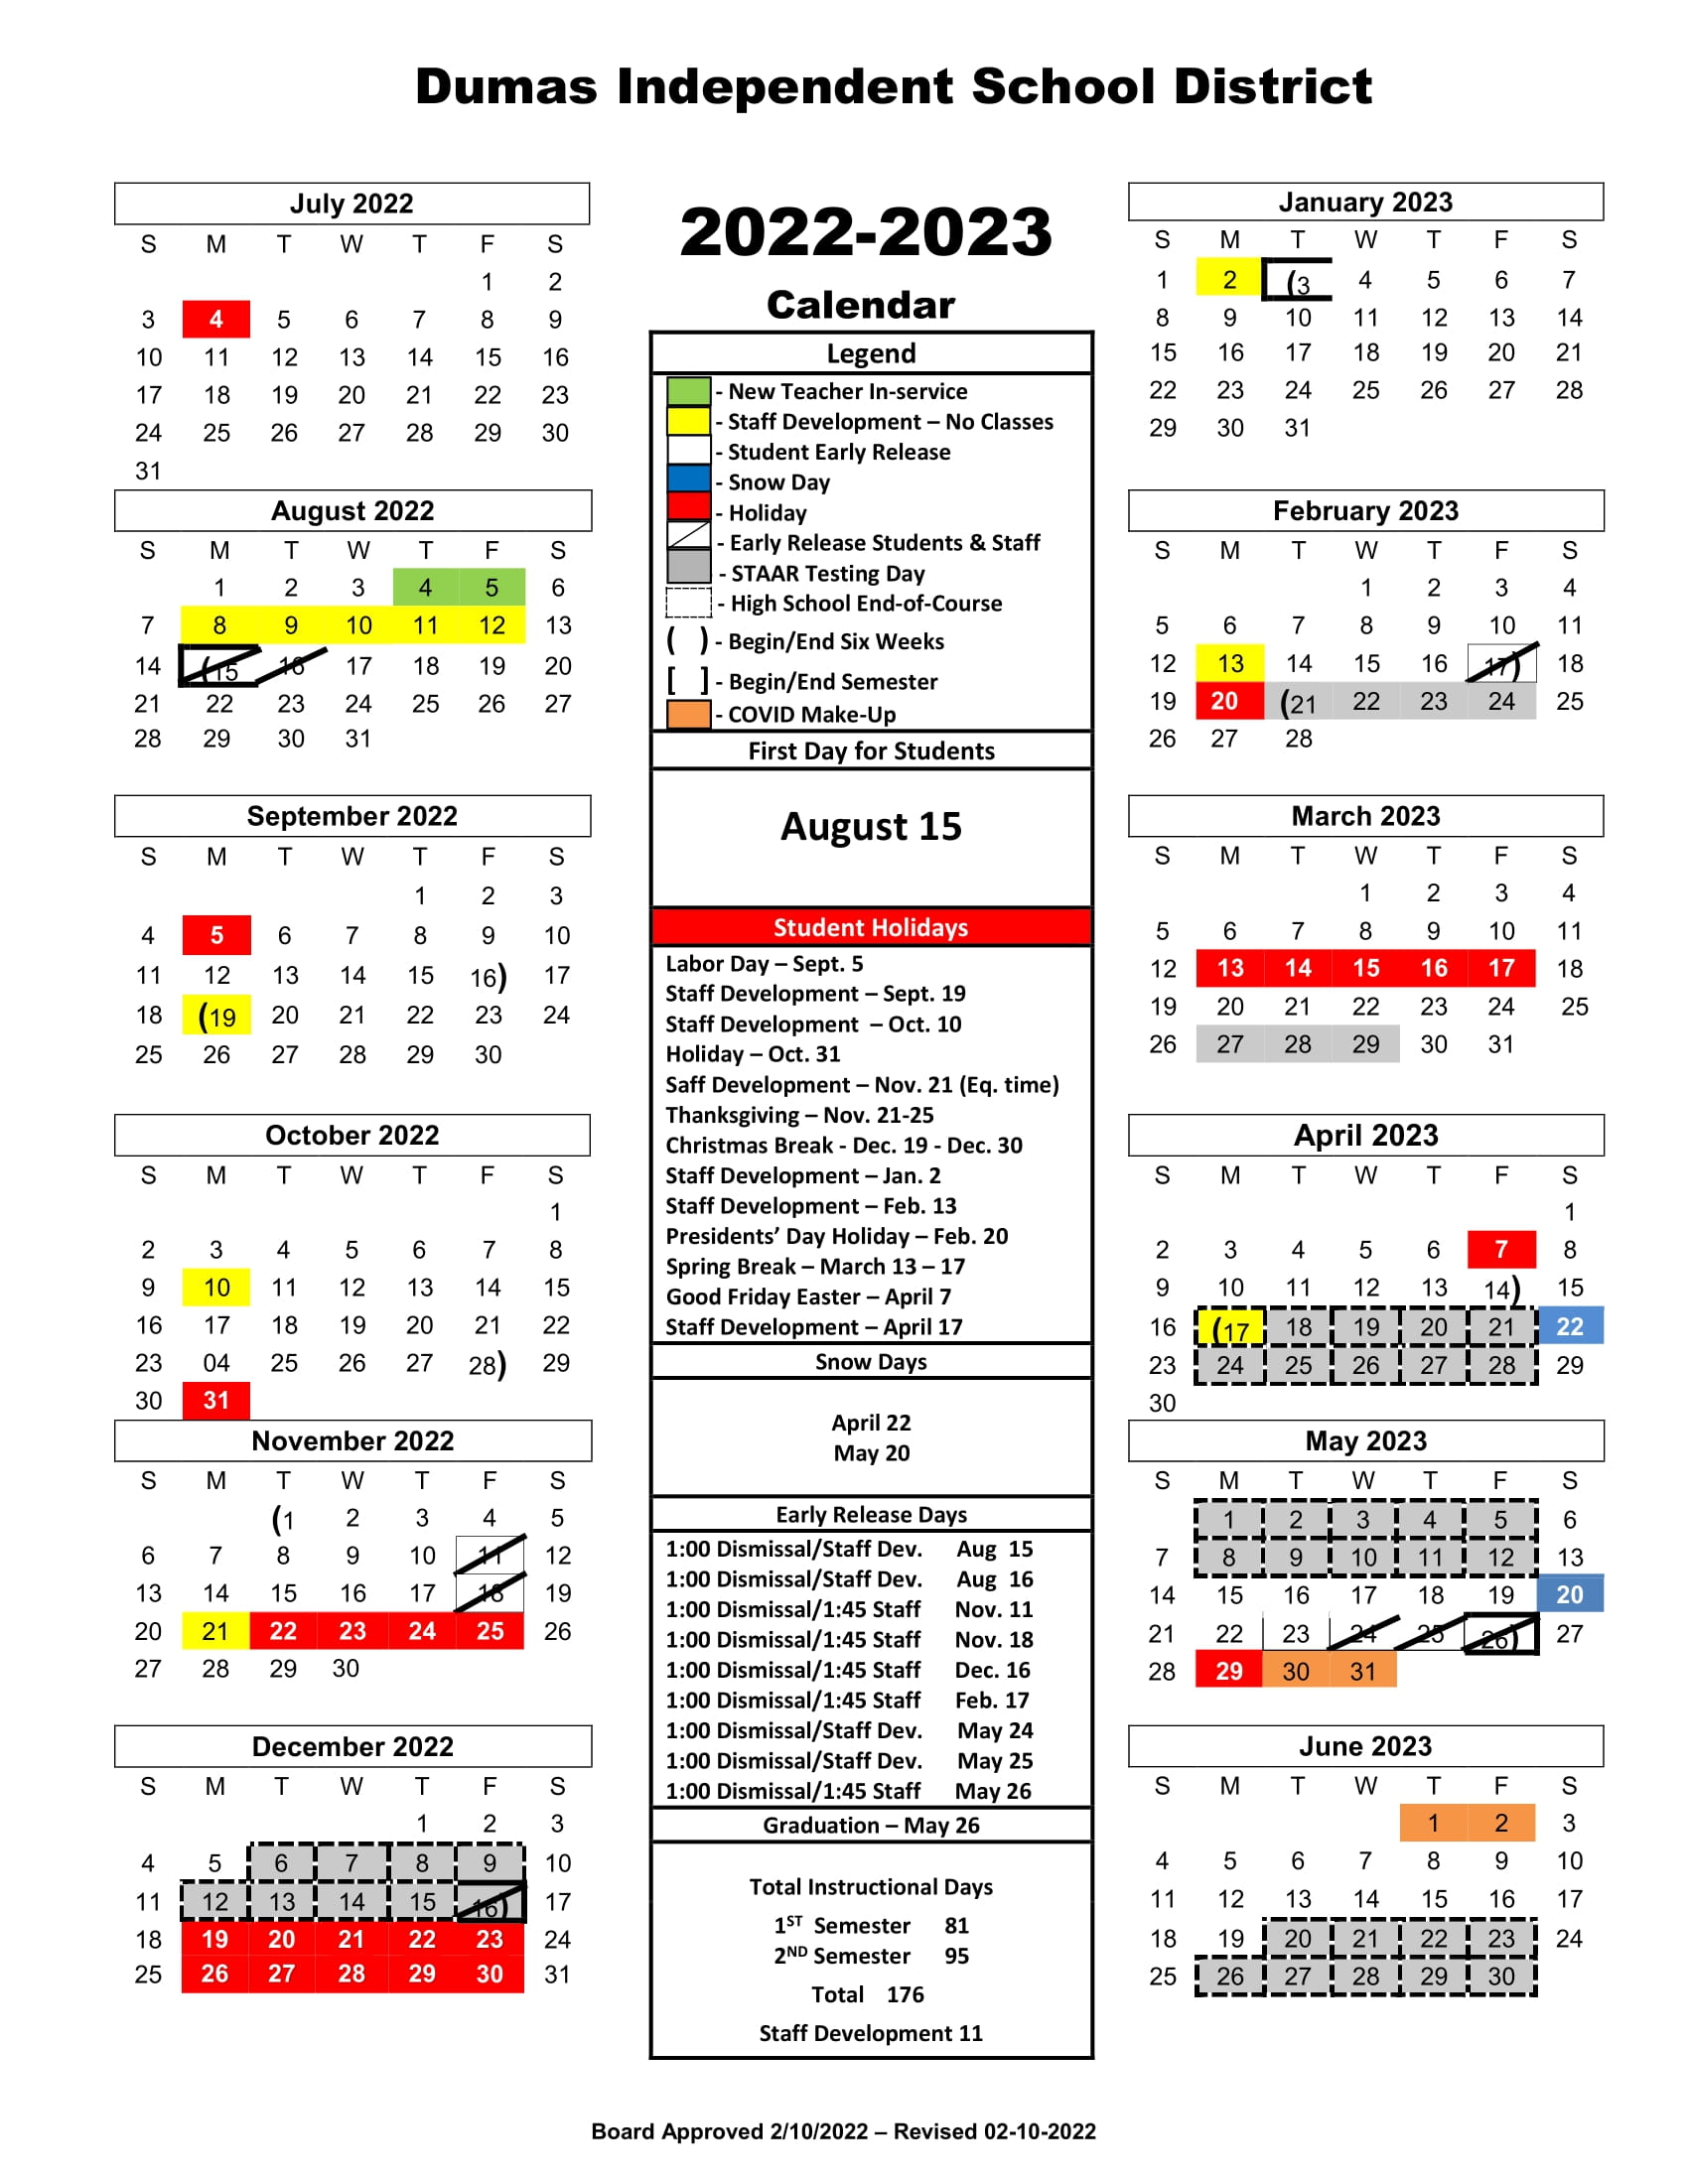 Disd Calendar 2022 Dumas Isd 2022-2023 Calendar - Moore County Journal